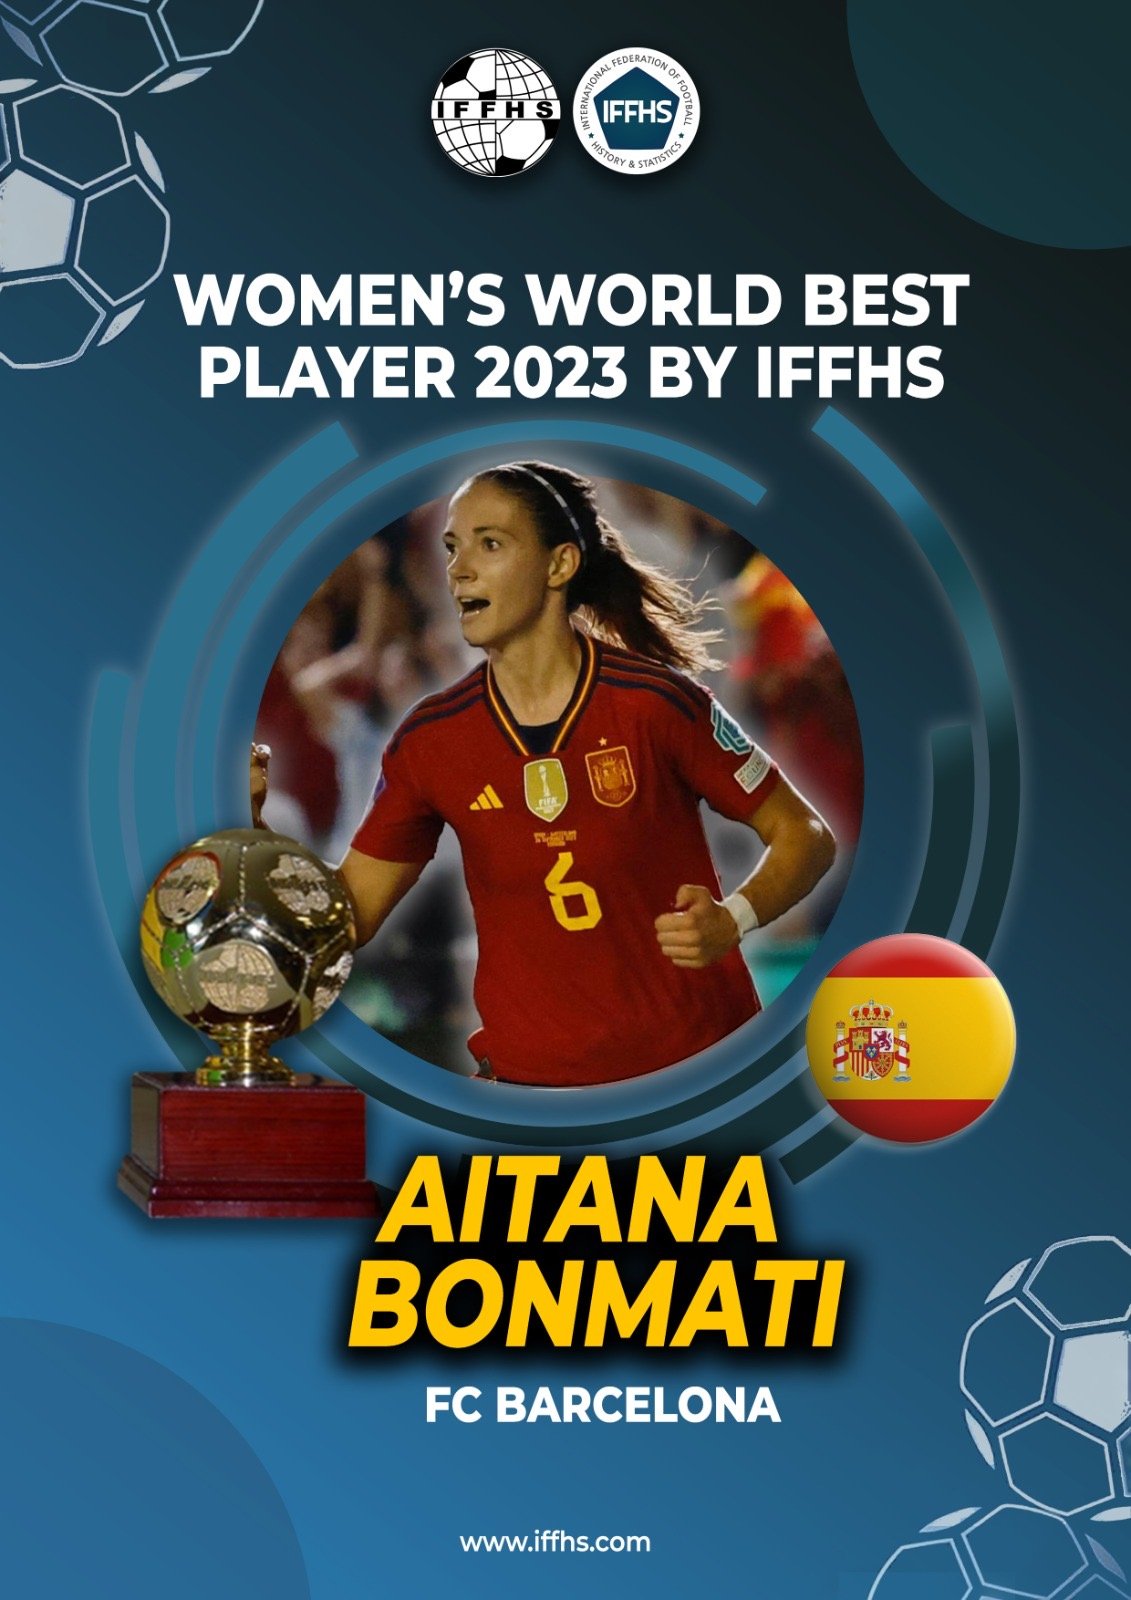 Aitana Bonmati wins the Women's World Best Player 2023 award. /IFFHS